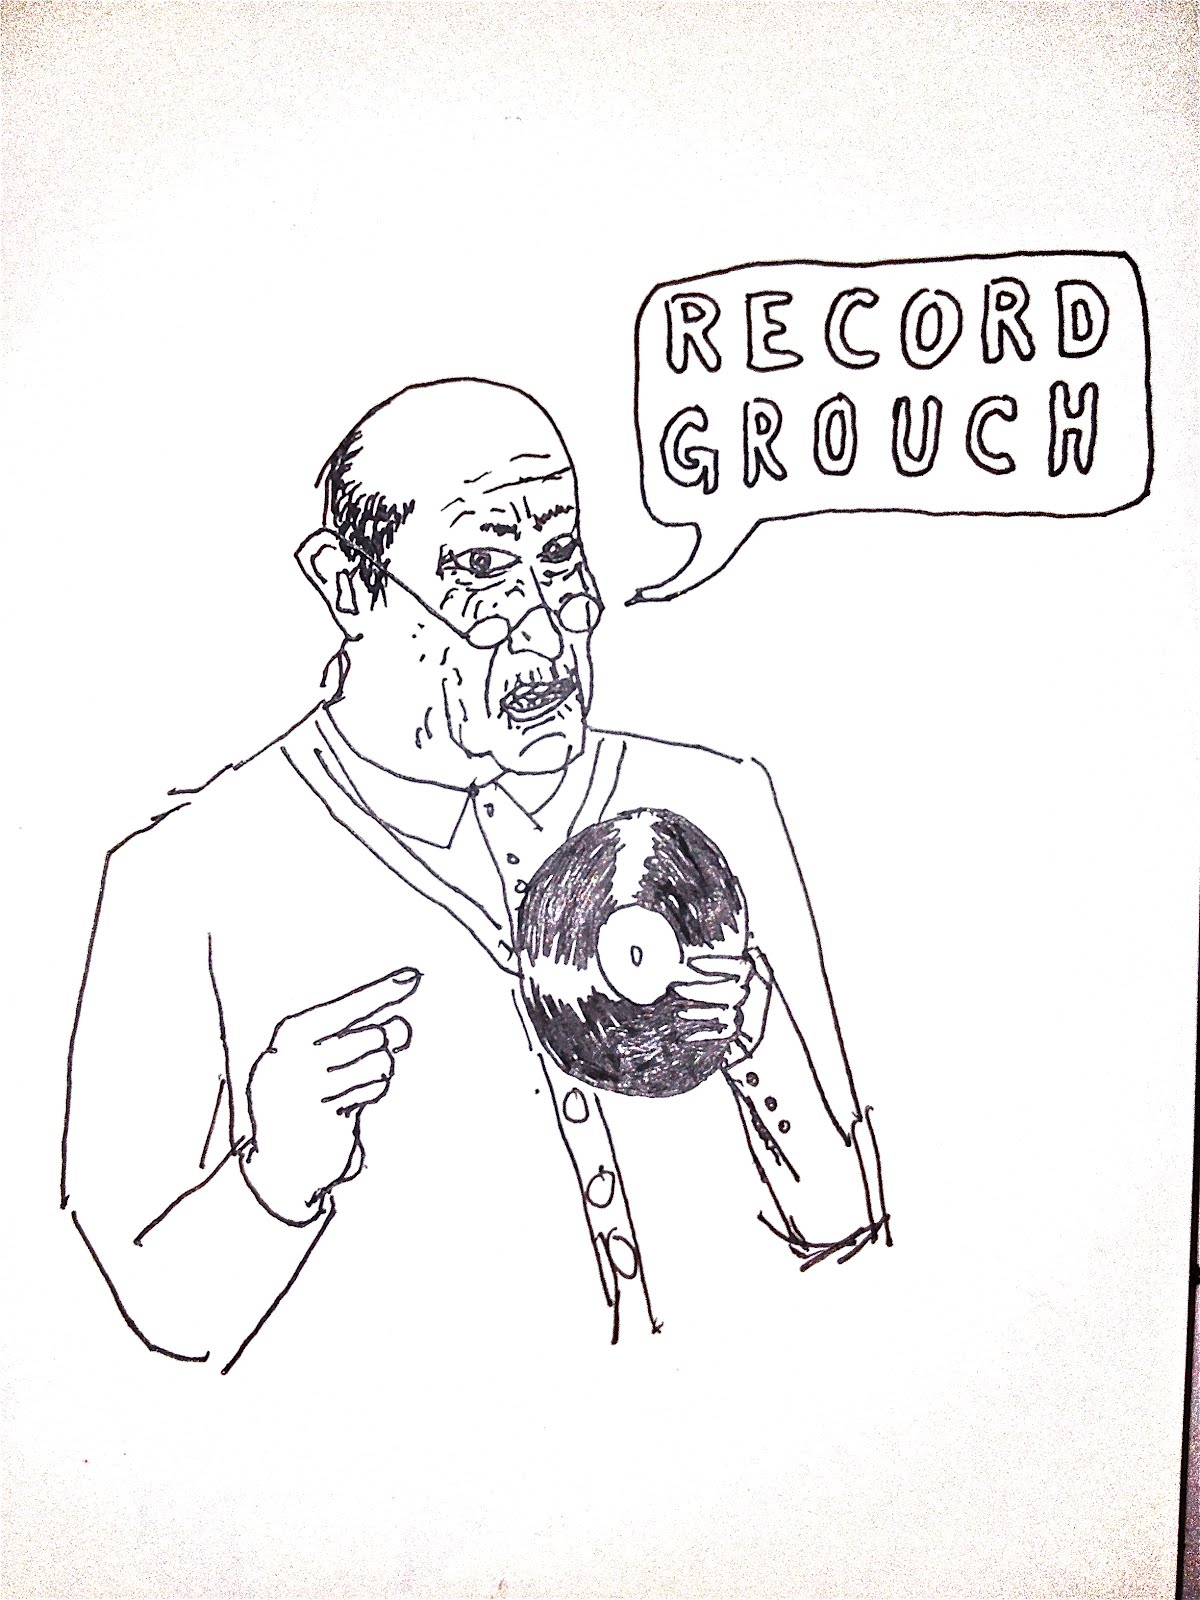 RecordGrouch.jpg